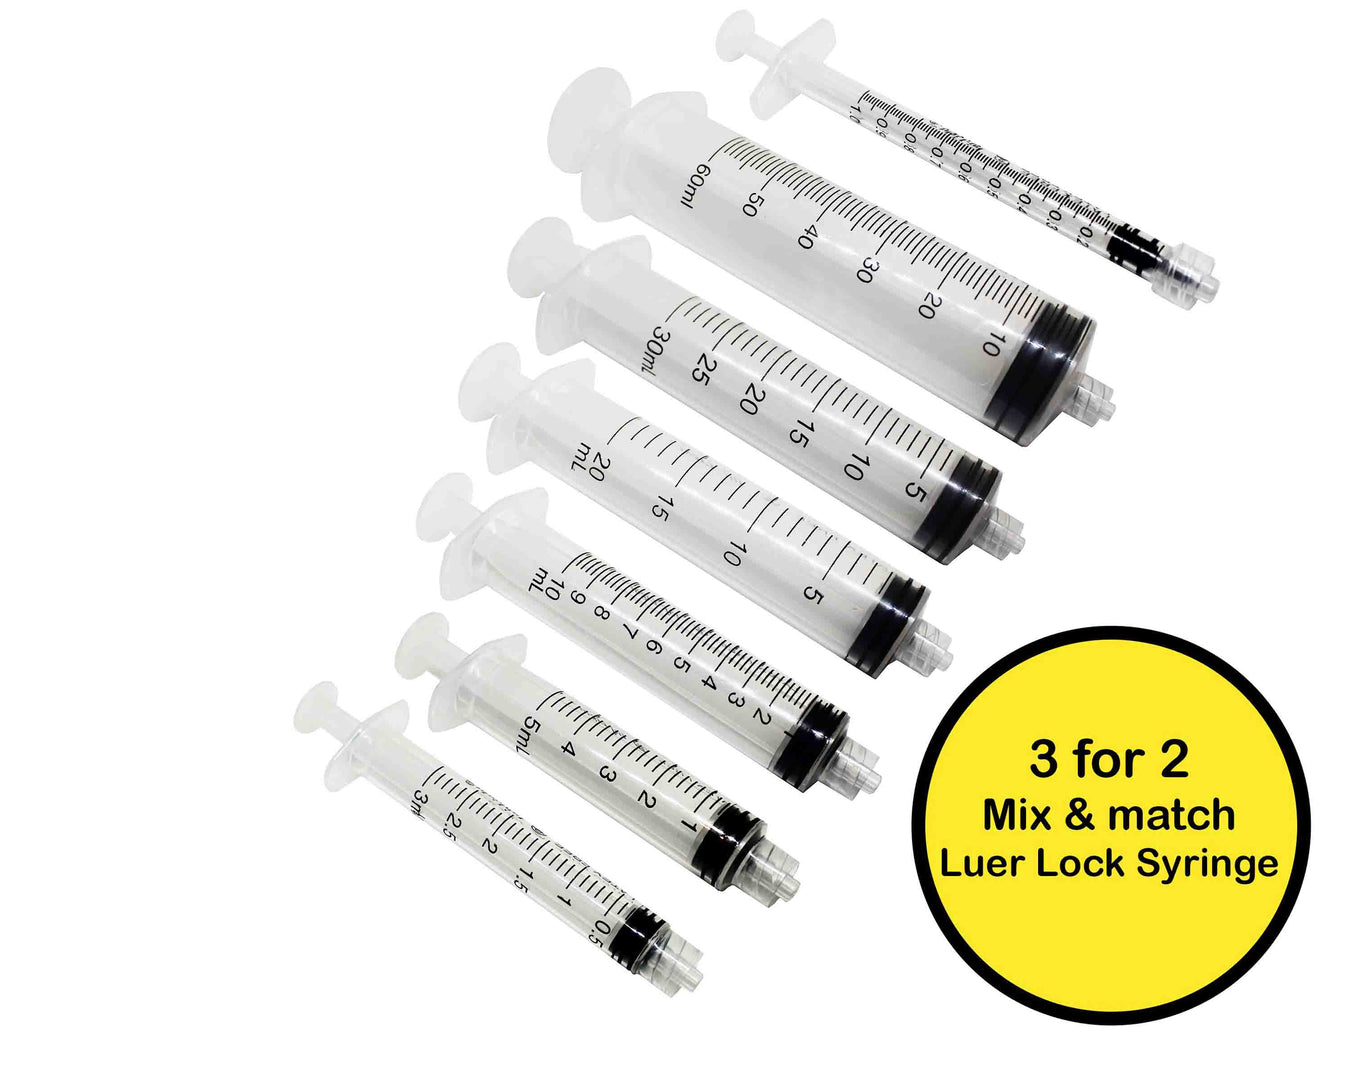 luer lock syringes 1ml 3ml 5ml 10ml 20ml 30ml 60ml sterile 3 part syringe latex free.